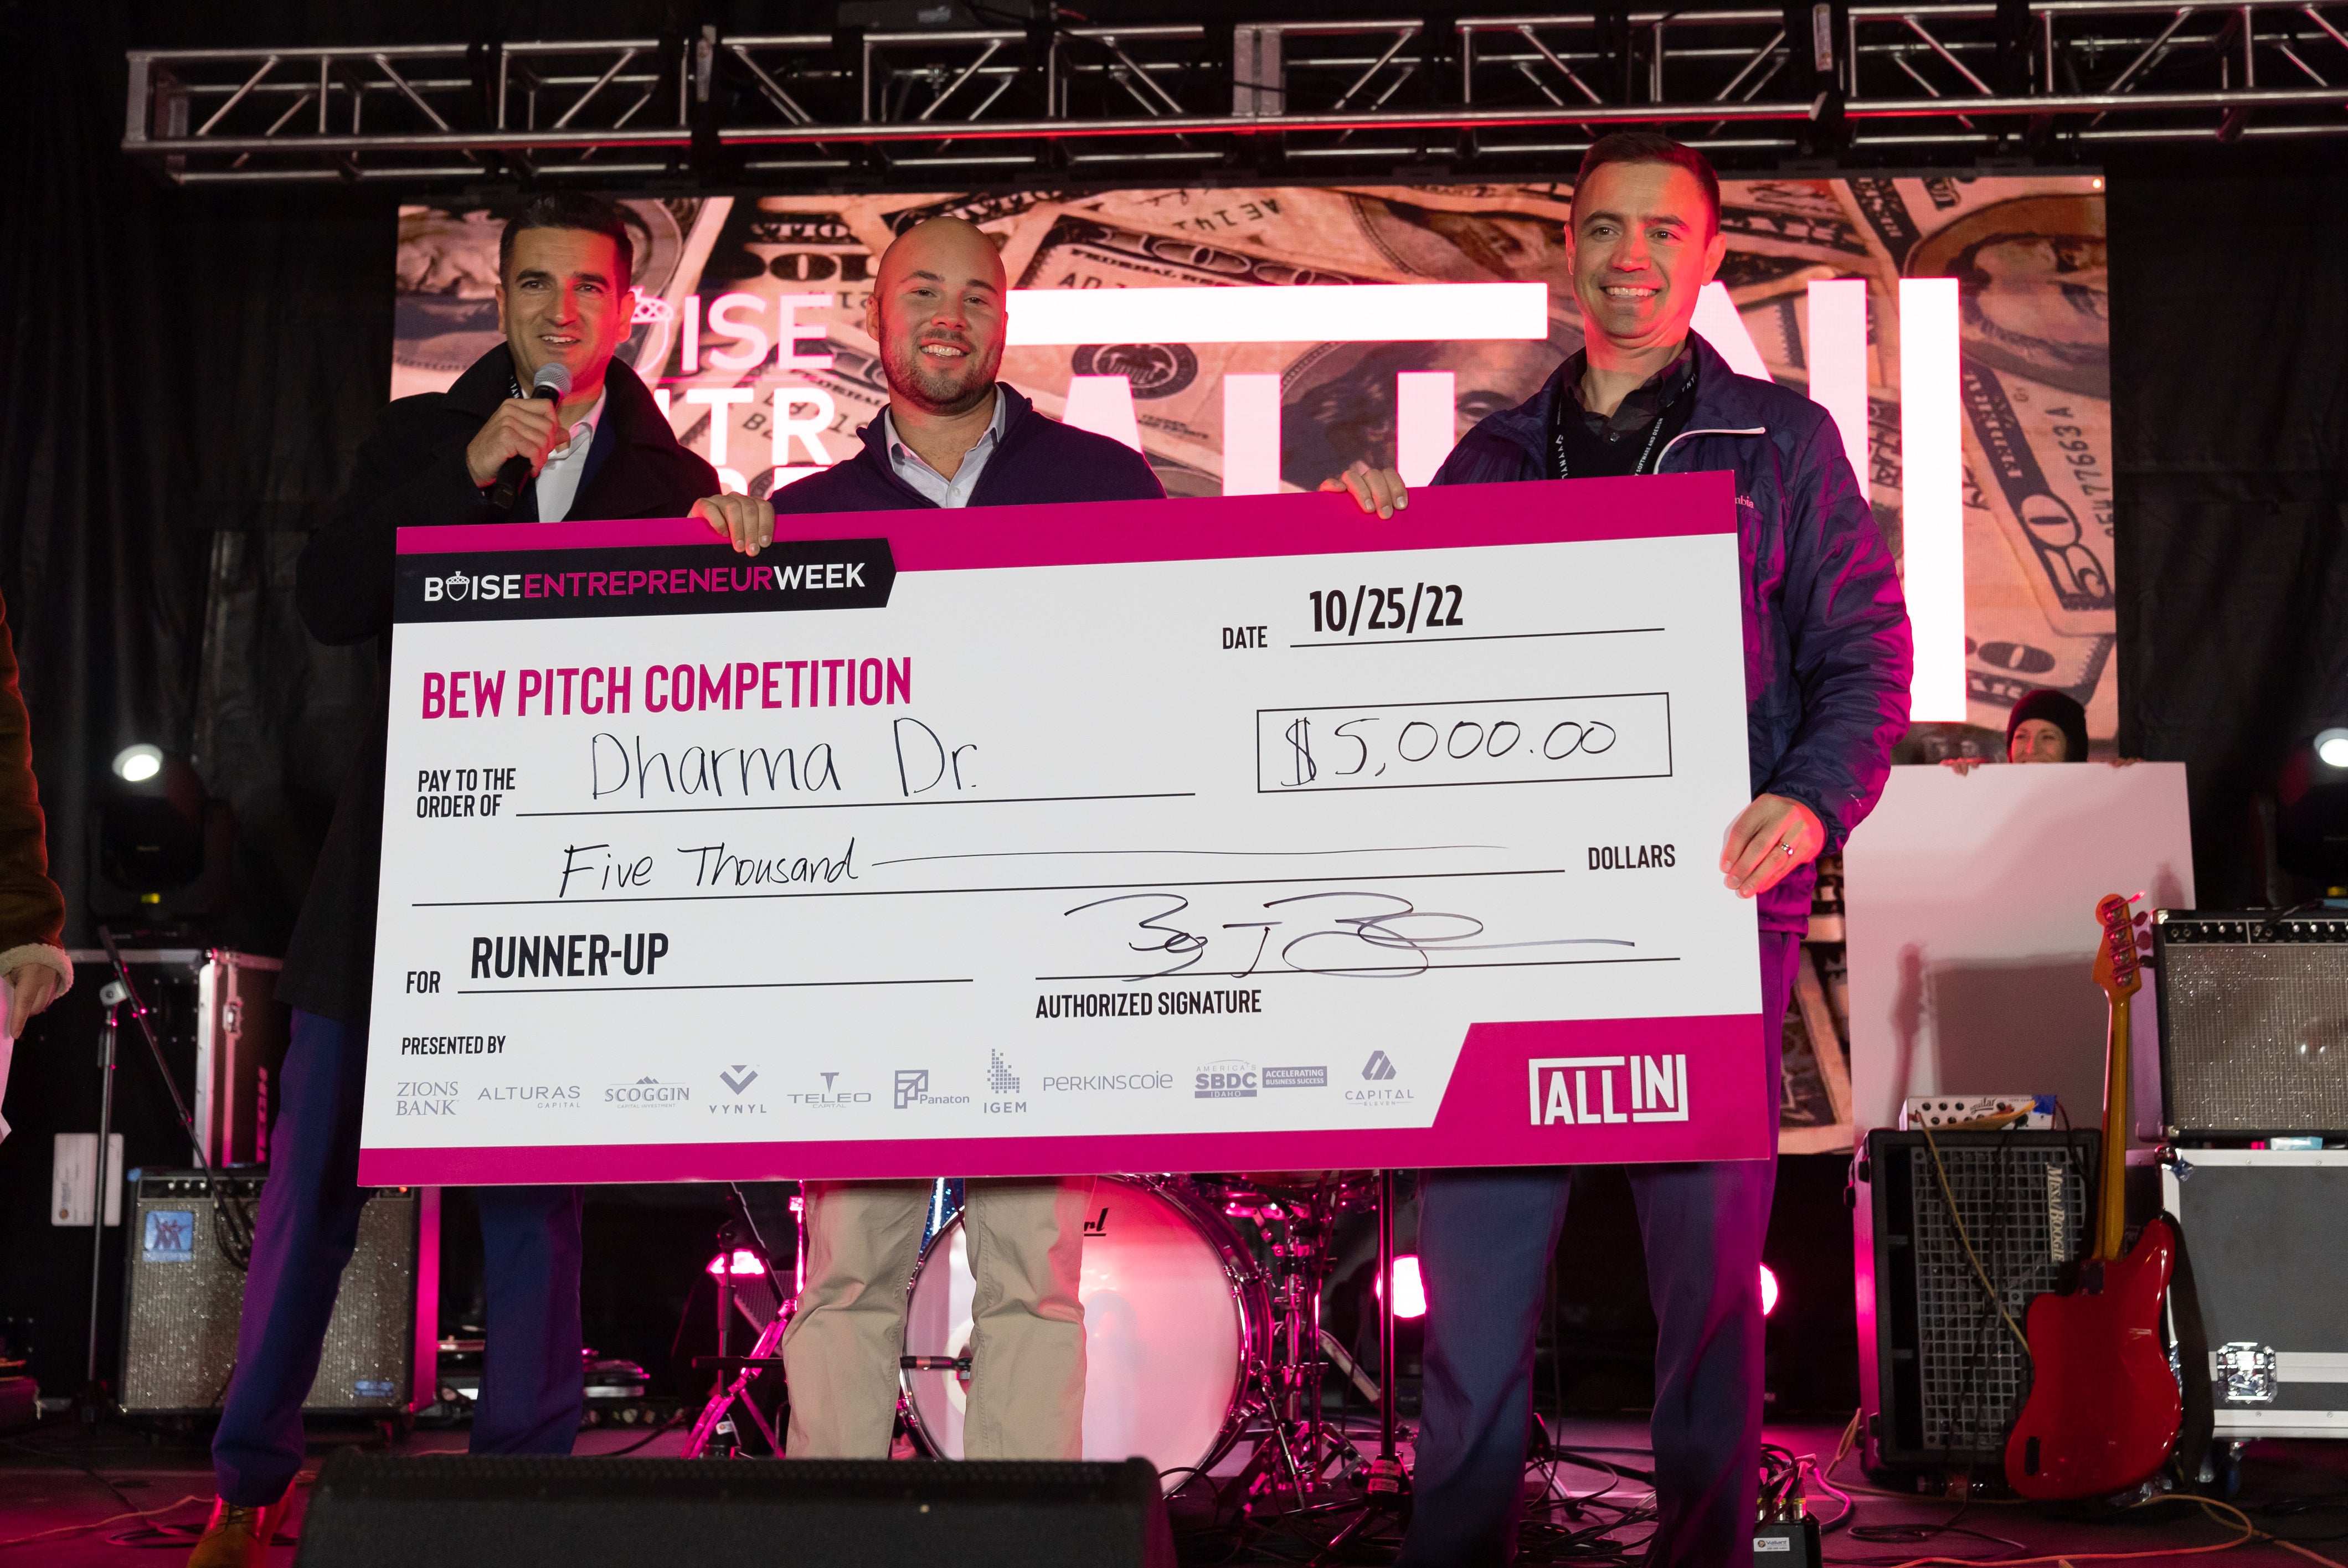 Brad Mosell Wins $5,000 as the Runner-Up at Boise Entrepreneur Week